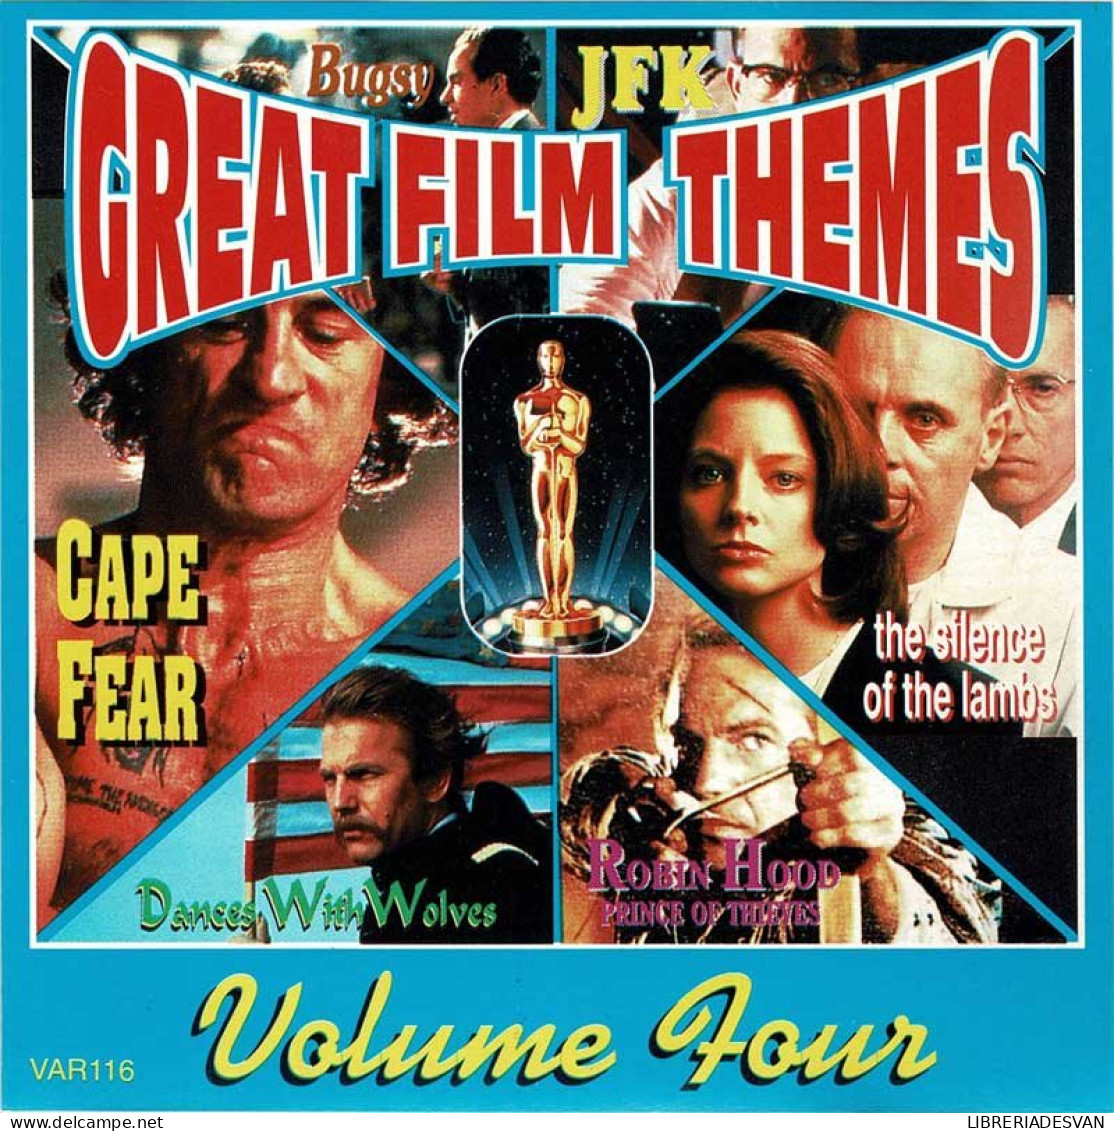 Great Film Themes Volume Four. CD - Musica Di Film